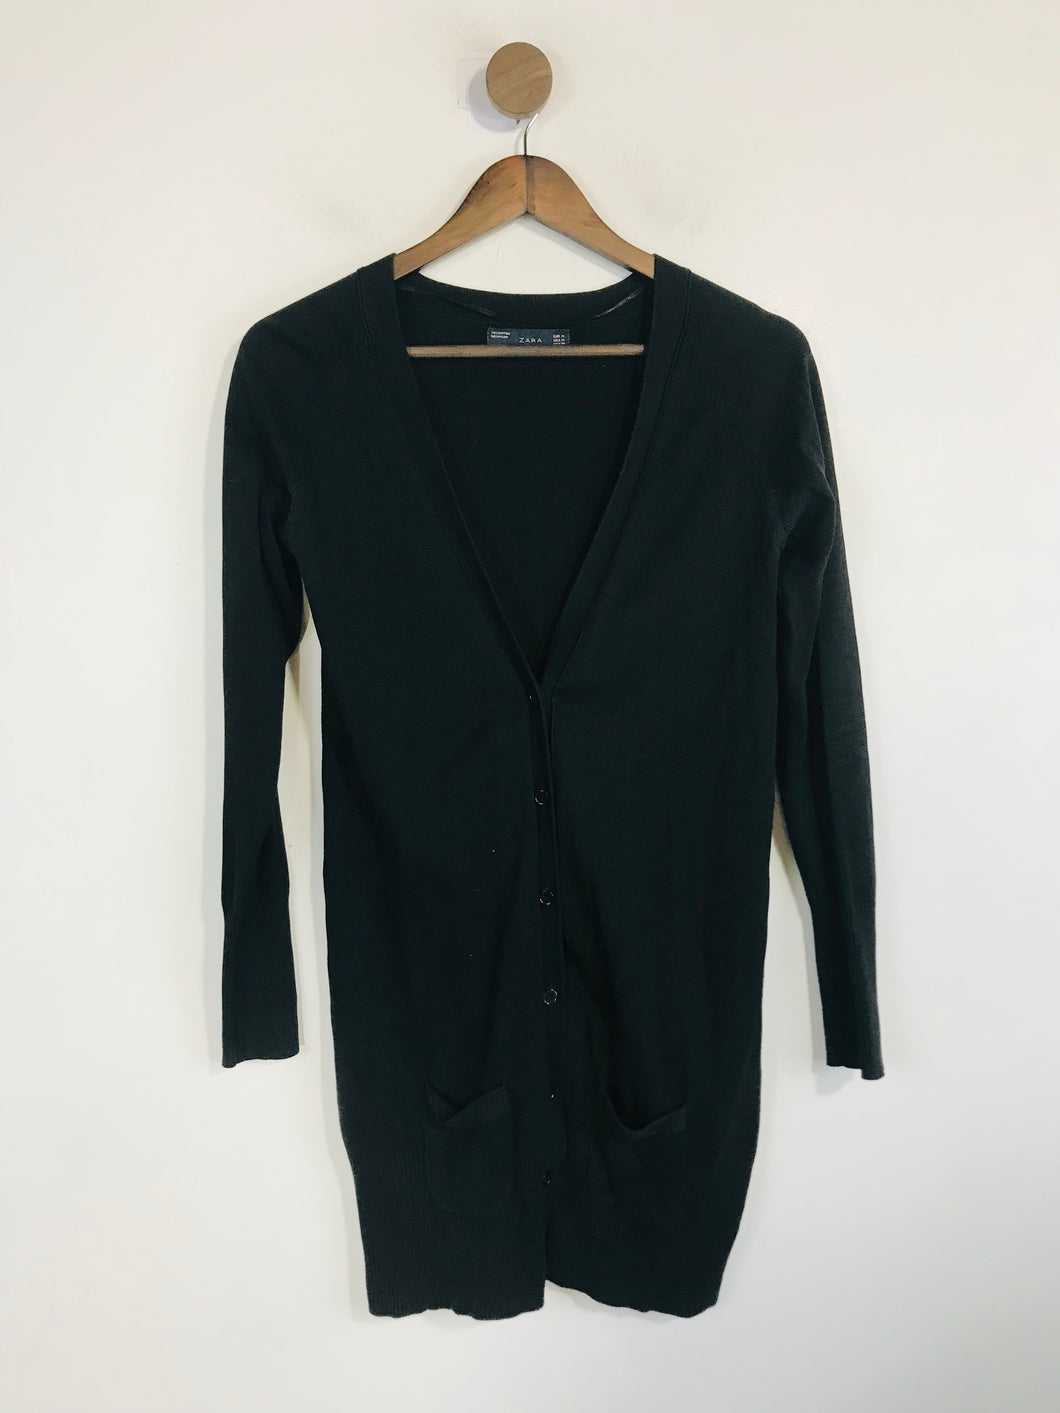 Zara Women's Knit Long Cardigan | M UK10-12 | Black